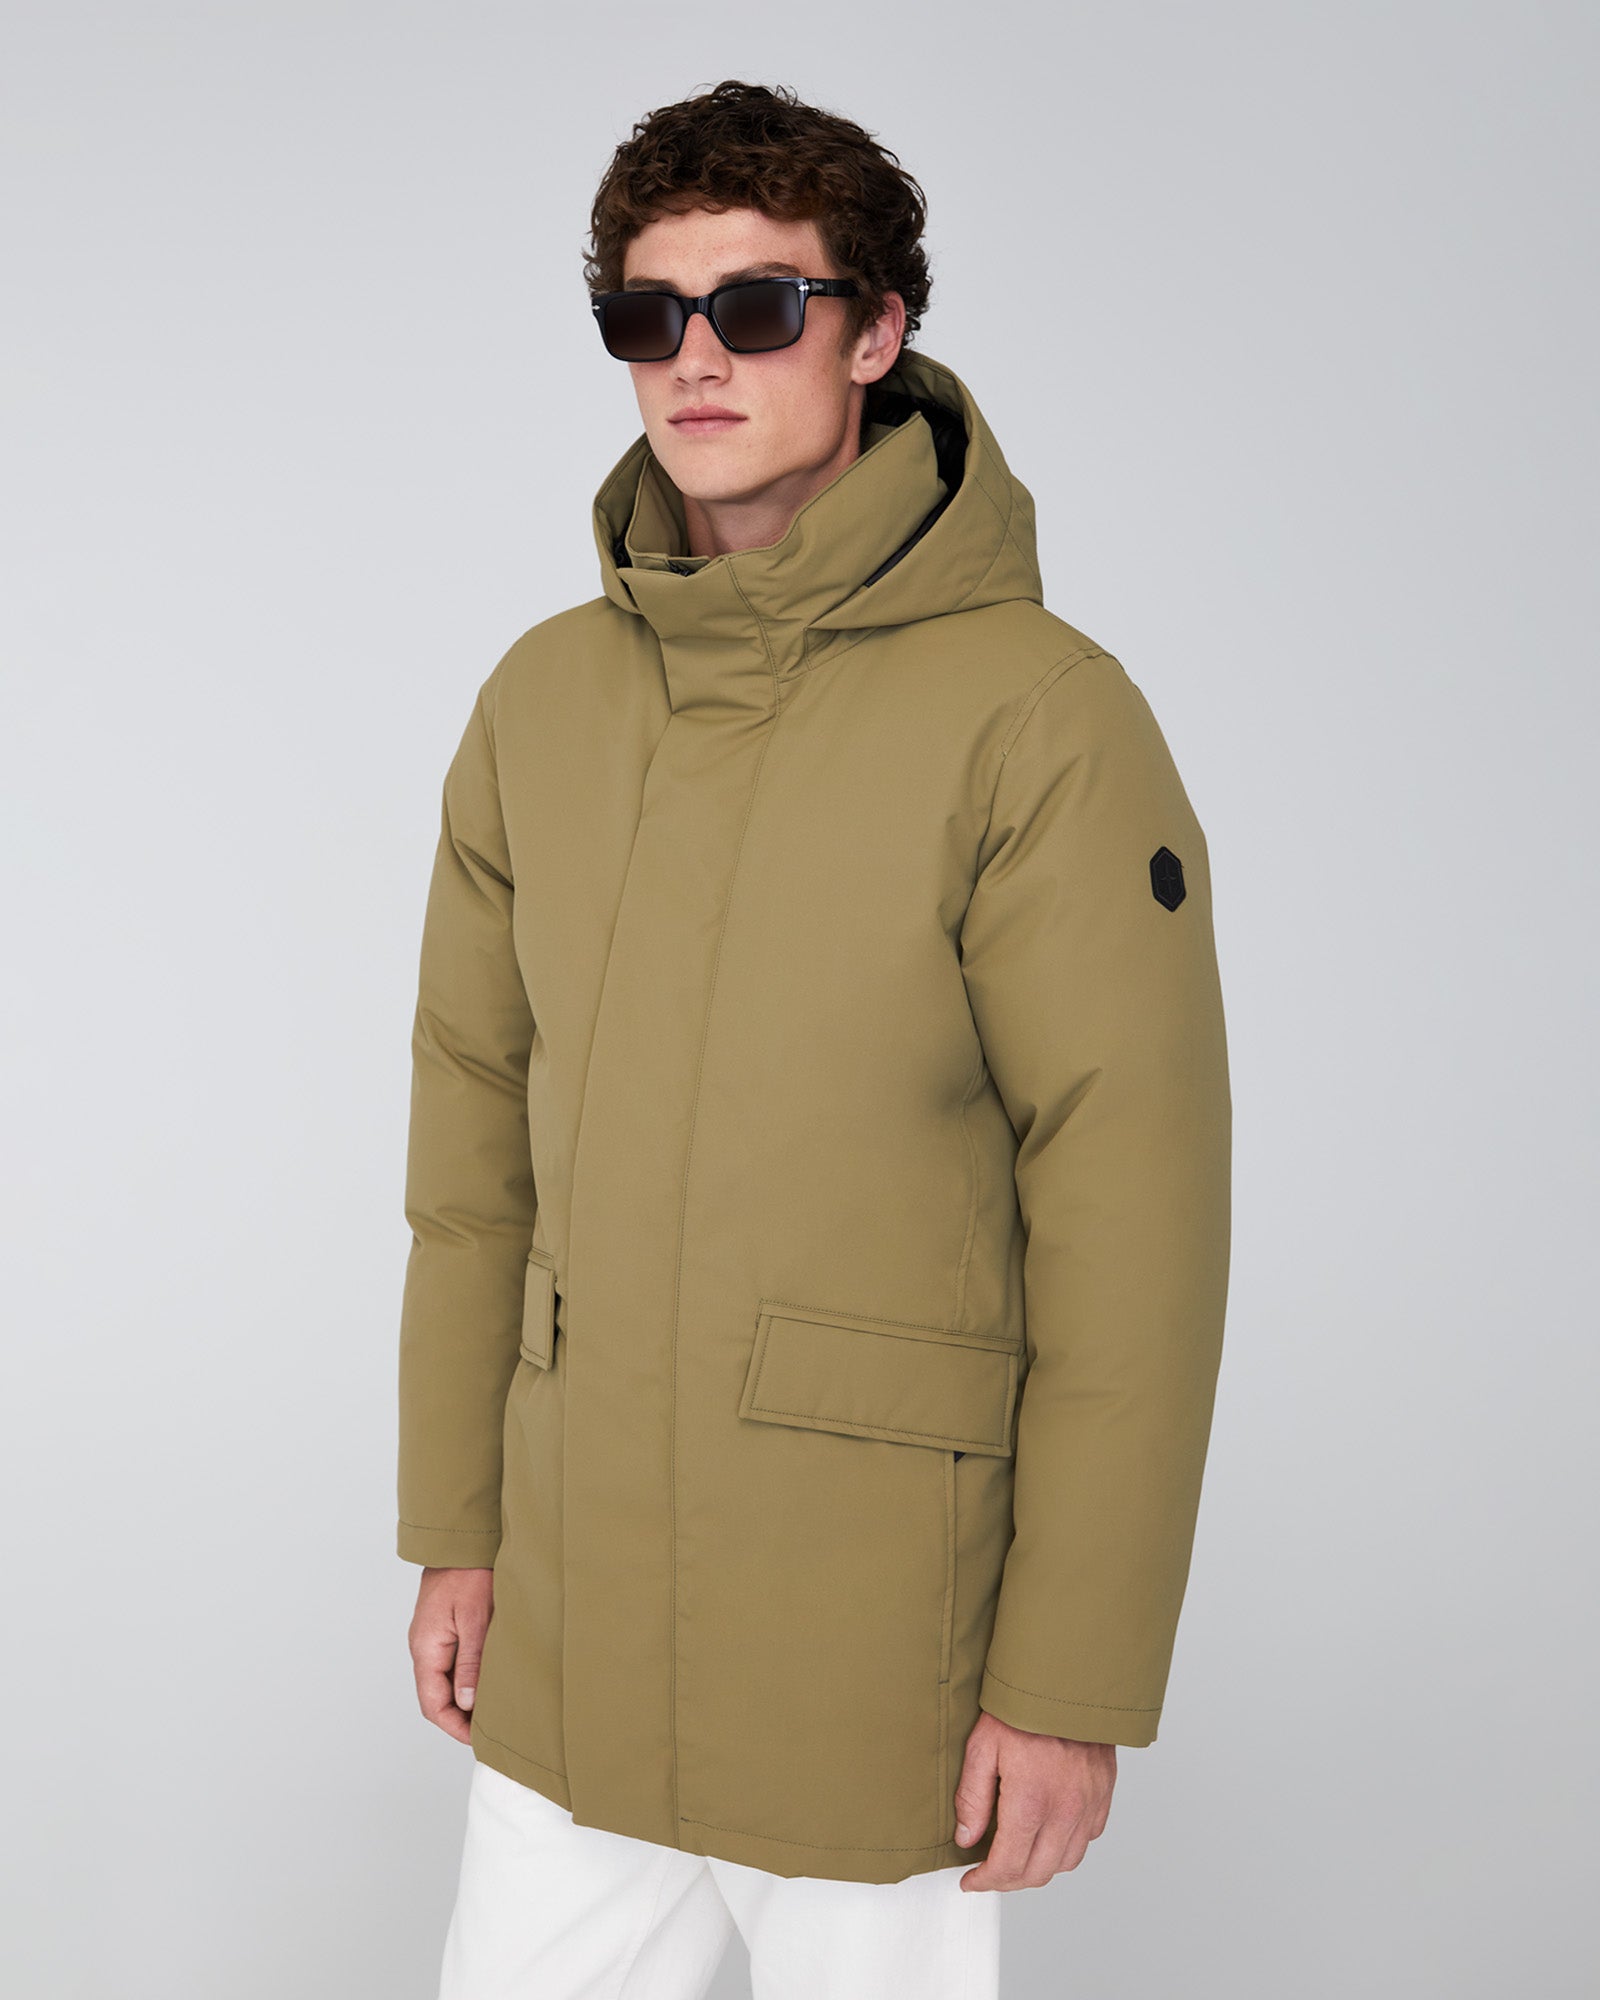 CHAMPLAIN | Hooded Down Winter Jacket